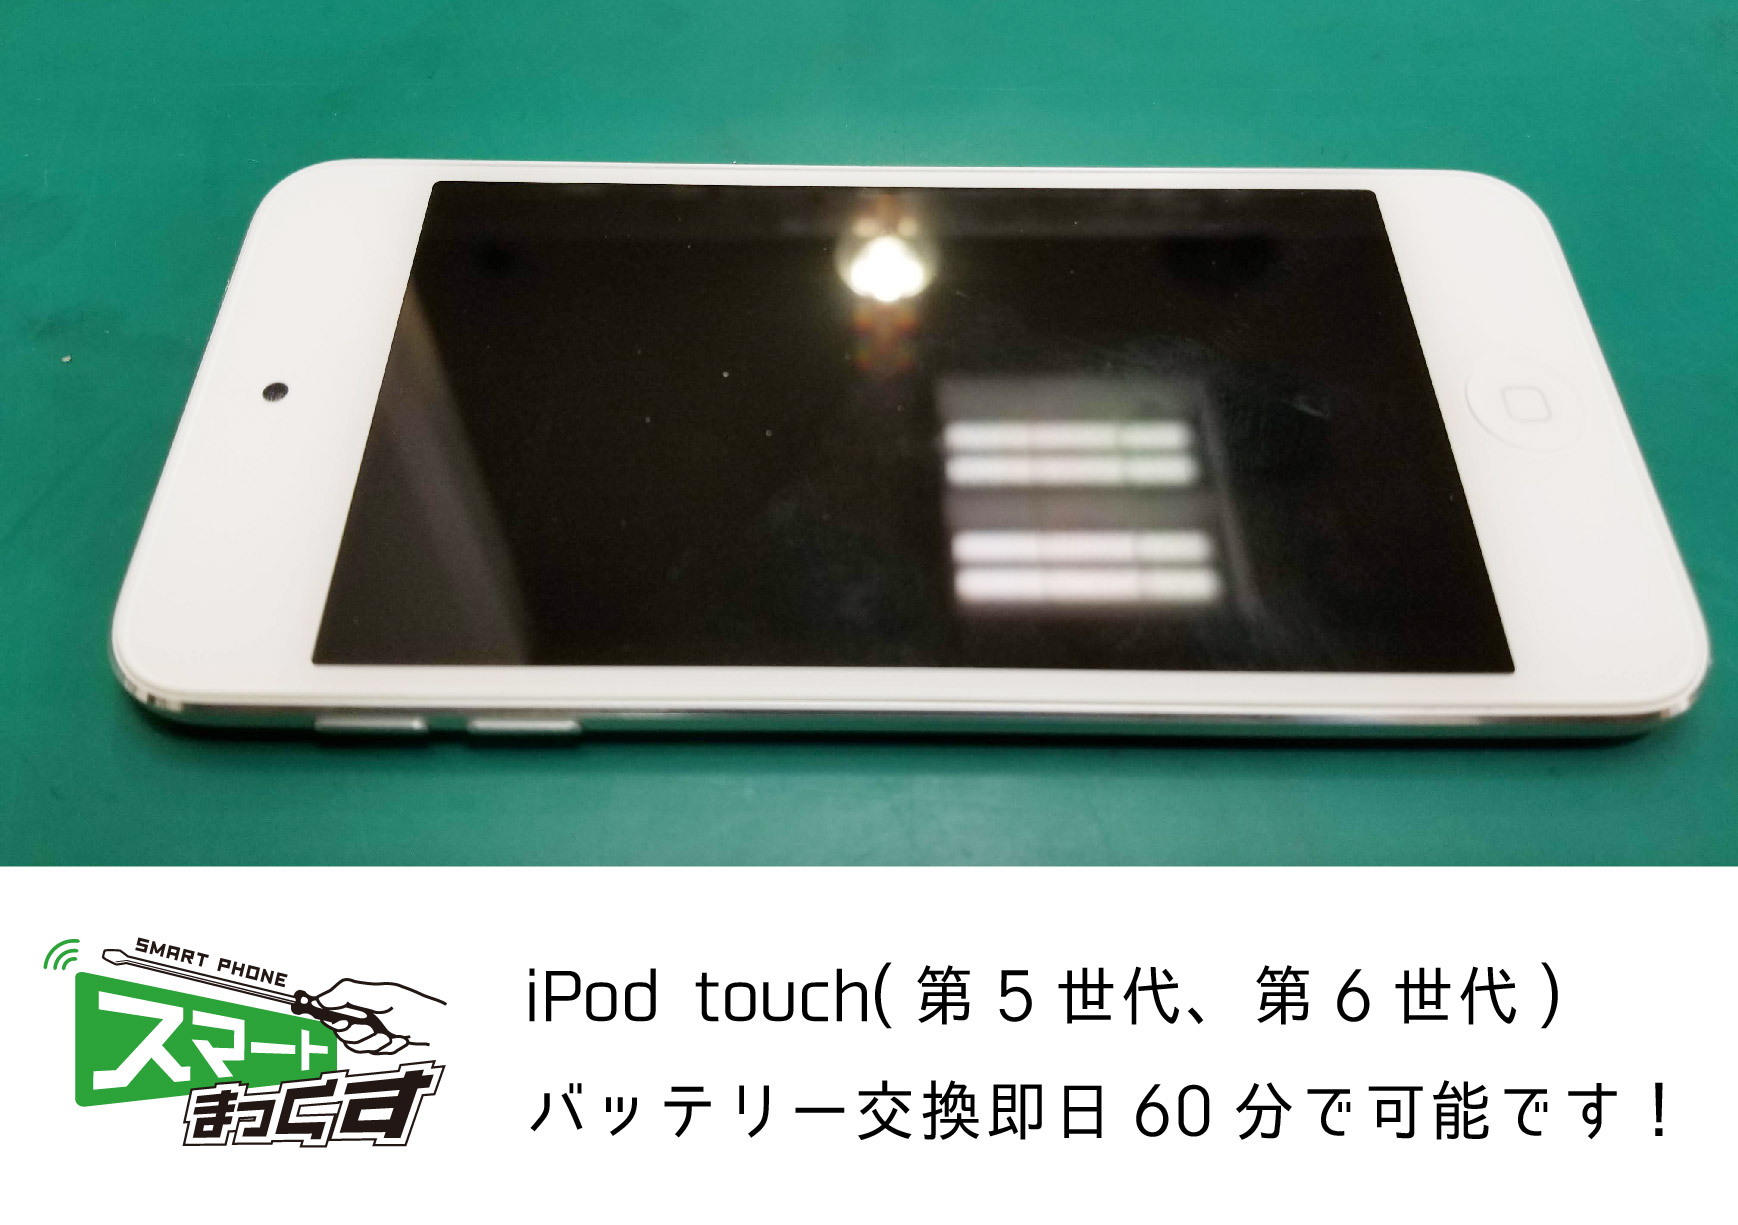 Ipod Touch 6 バッテリー交換は60分で可能です 東京 大阪 滋賀のスマートフォン修理 スマートまっくす 全国対応